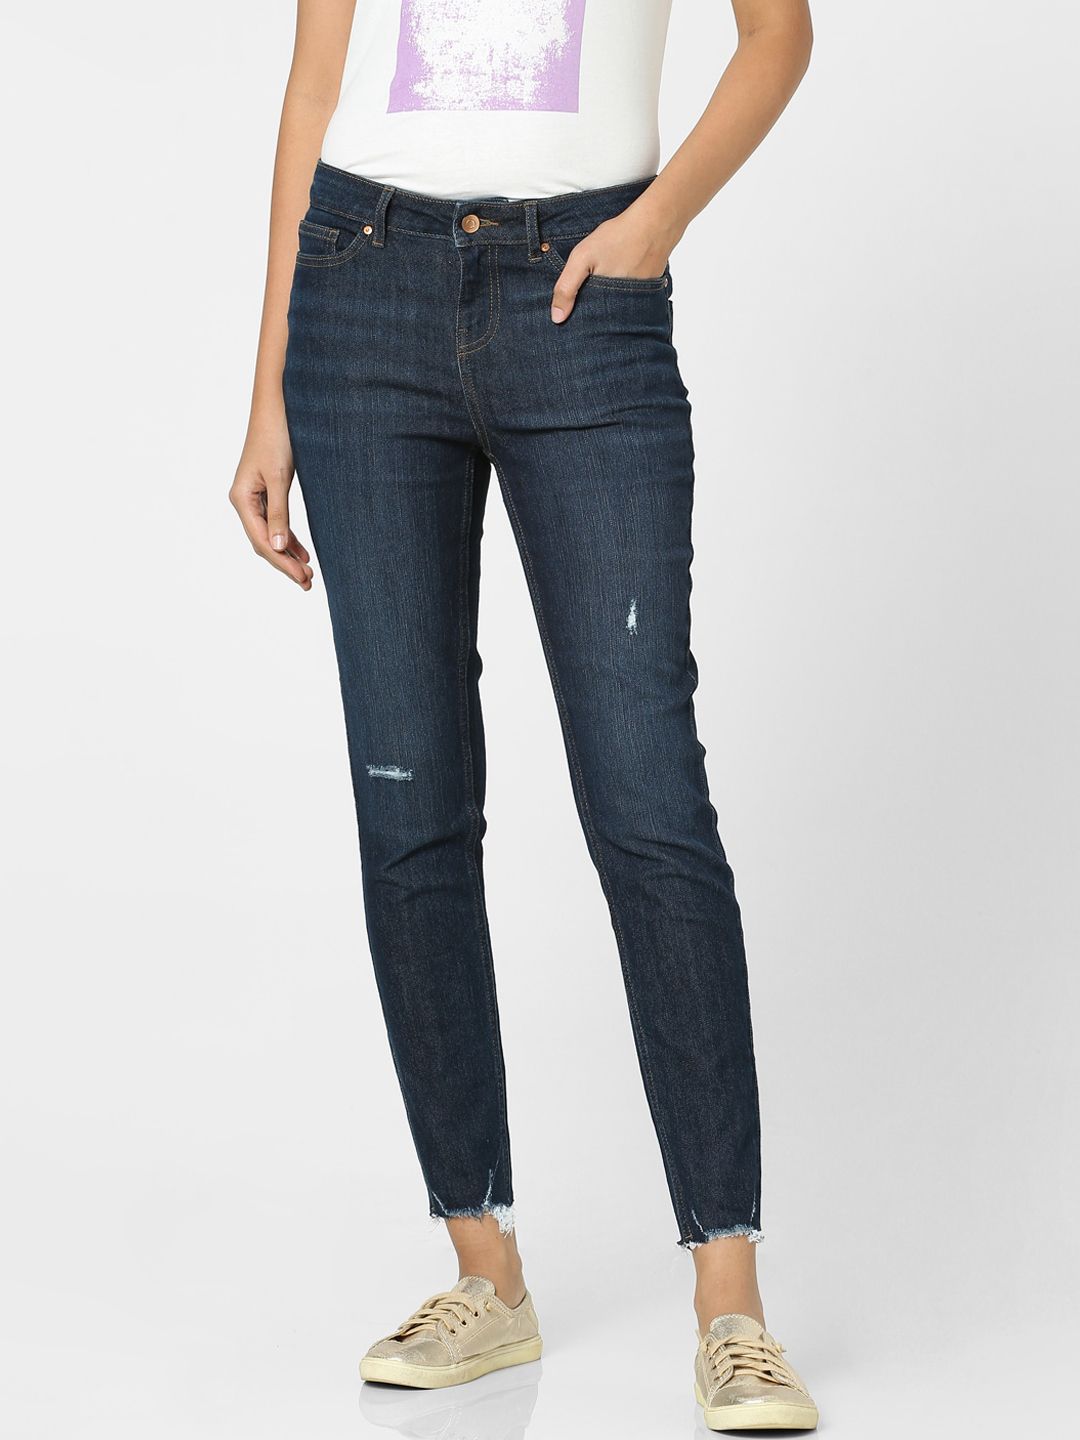 Vero Moda Women Blue Skinny Fit Low Distress Light Fade Jeans Price in India